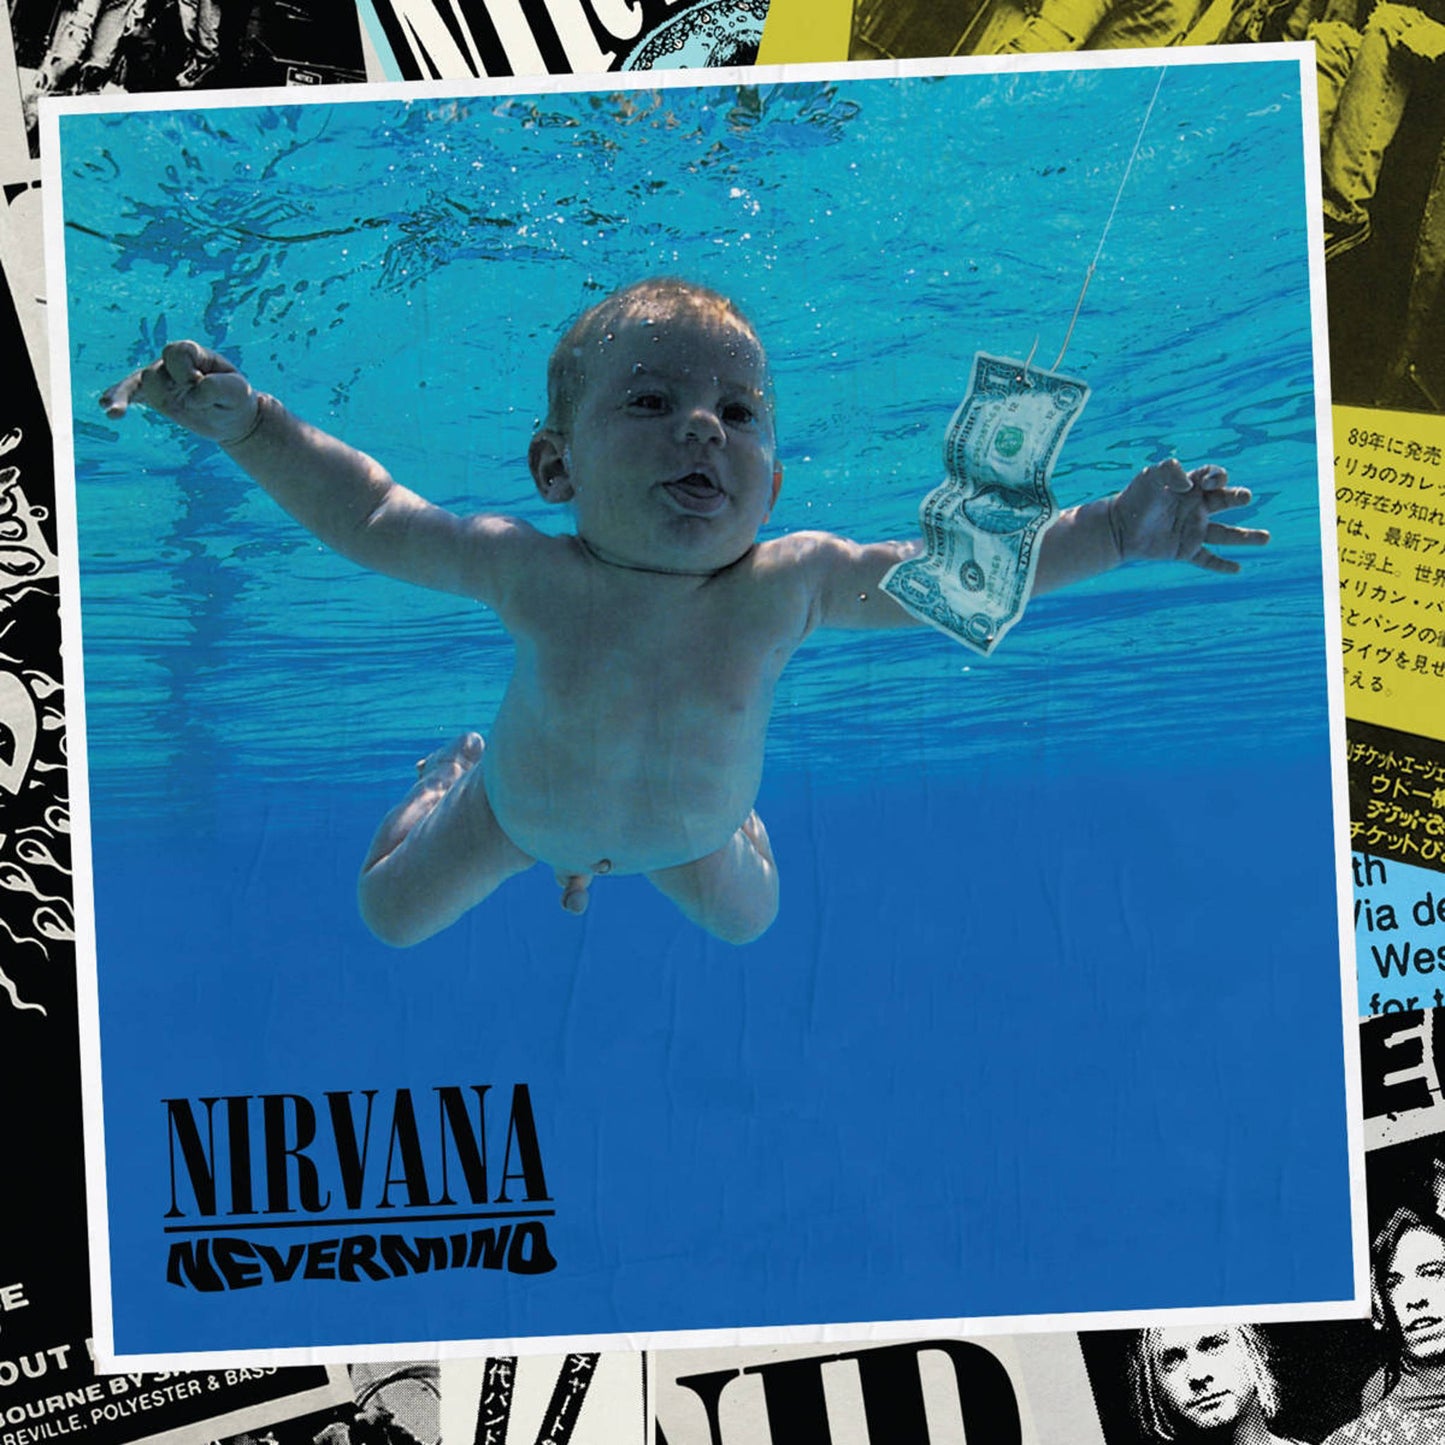 Nirvana - Nevermind (Deluxe CD)